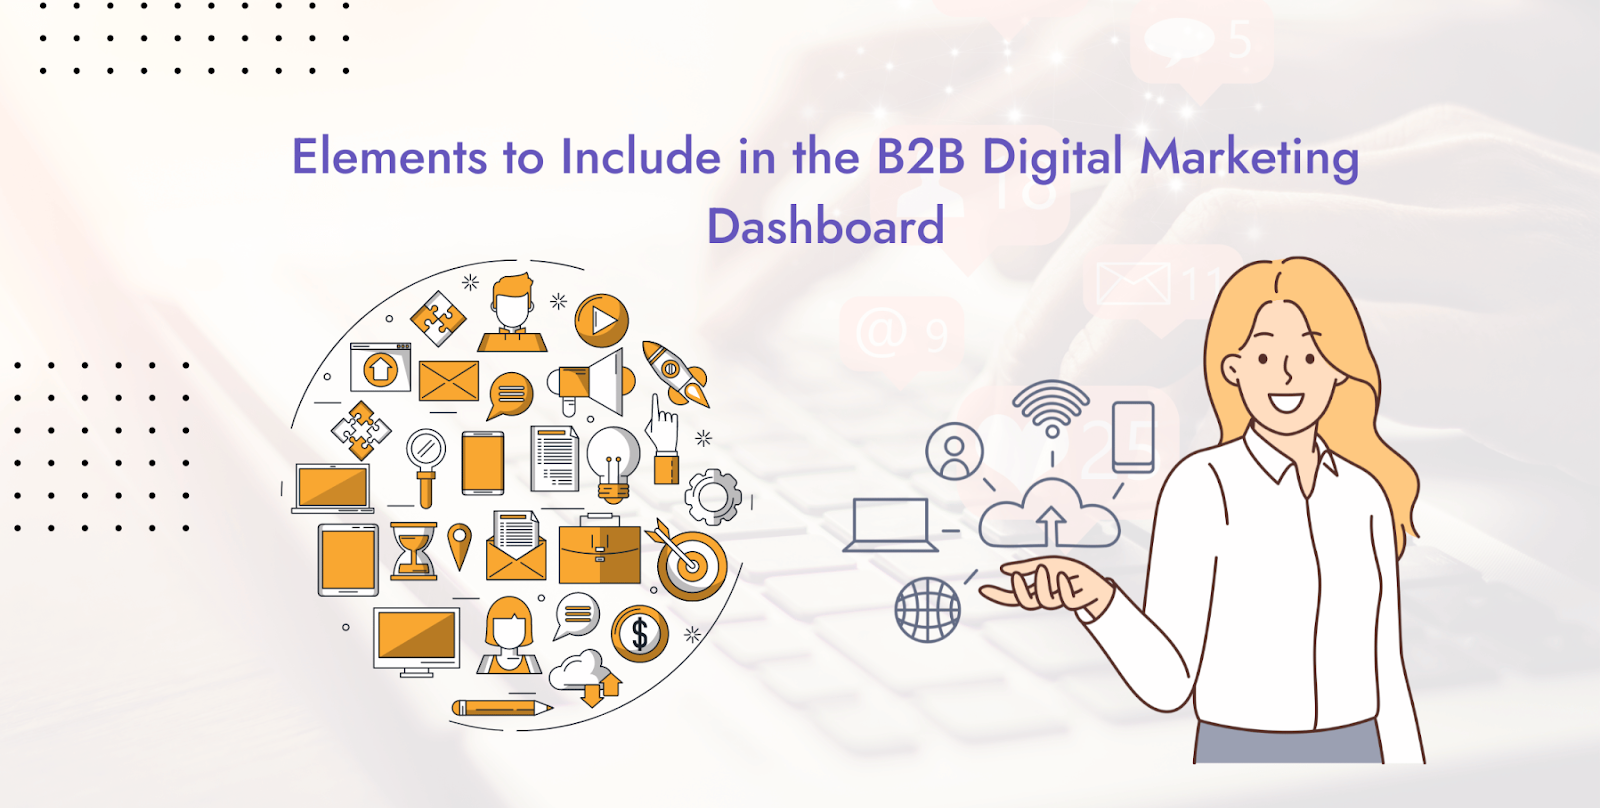 Elements to include in B2B Digital Marketing Dashboard 